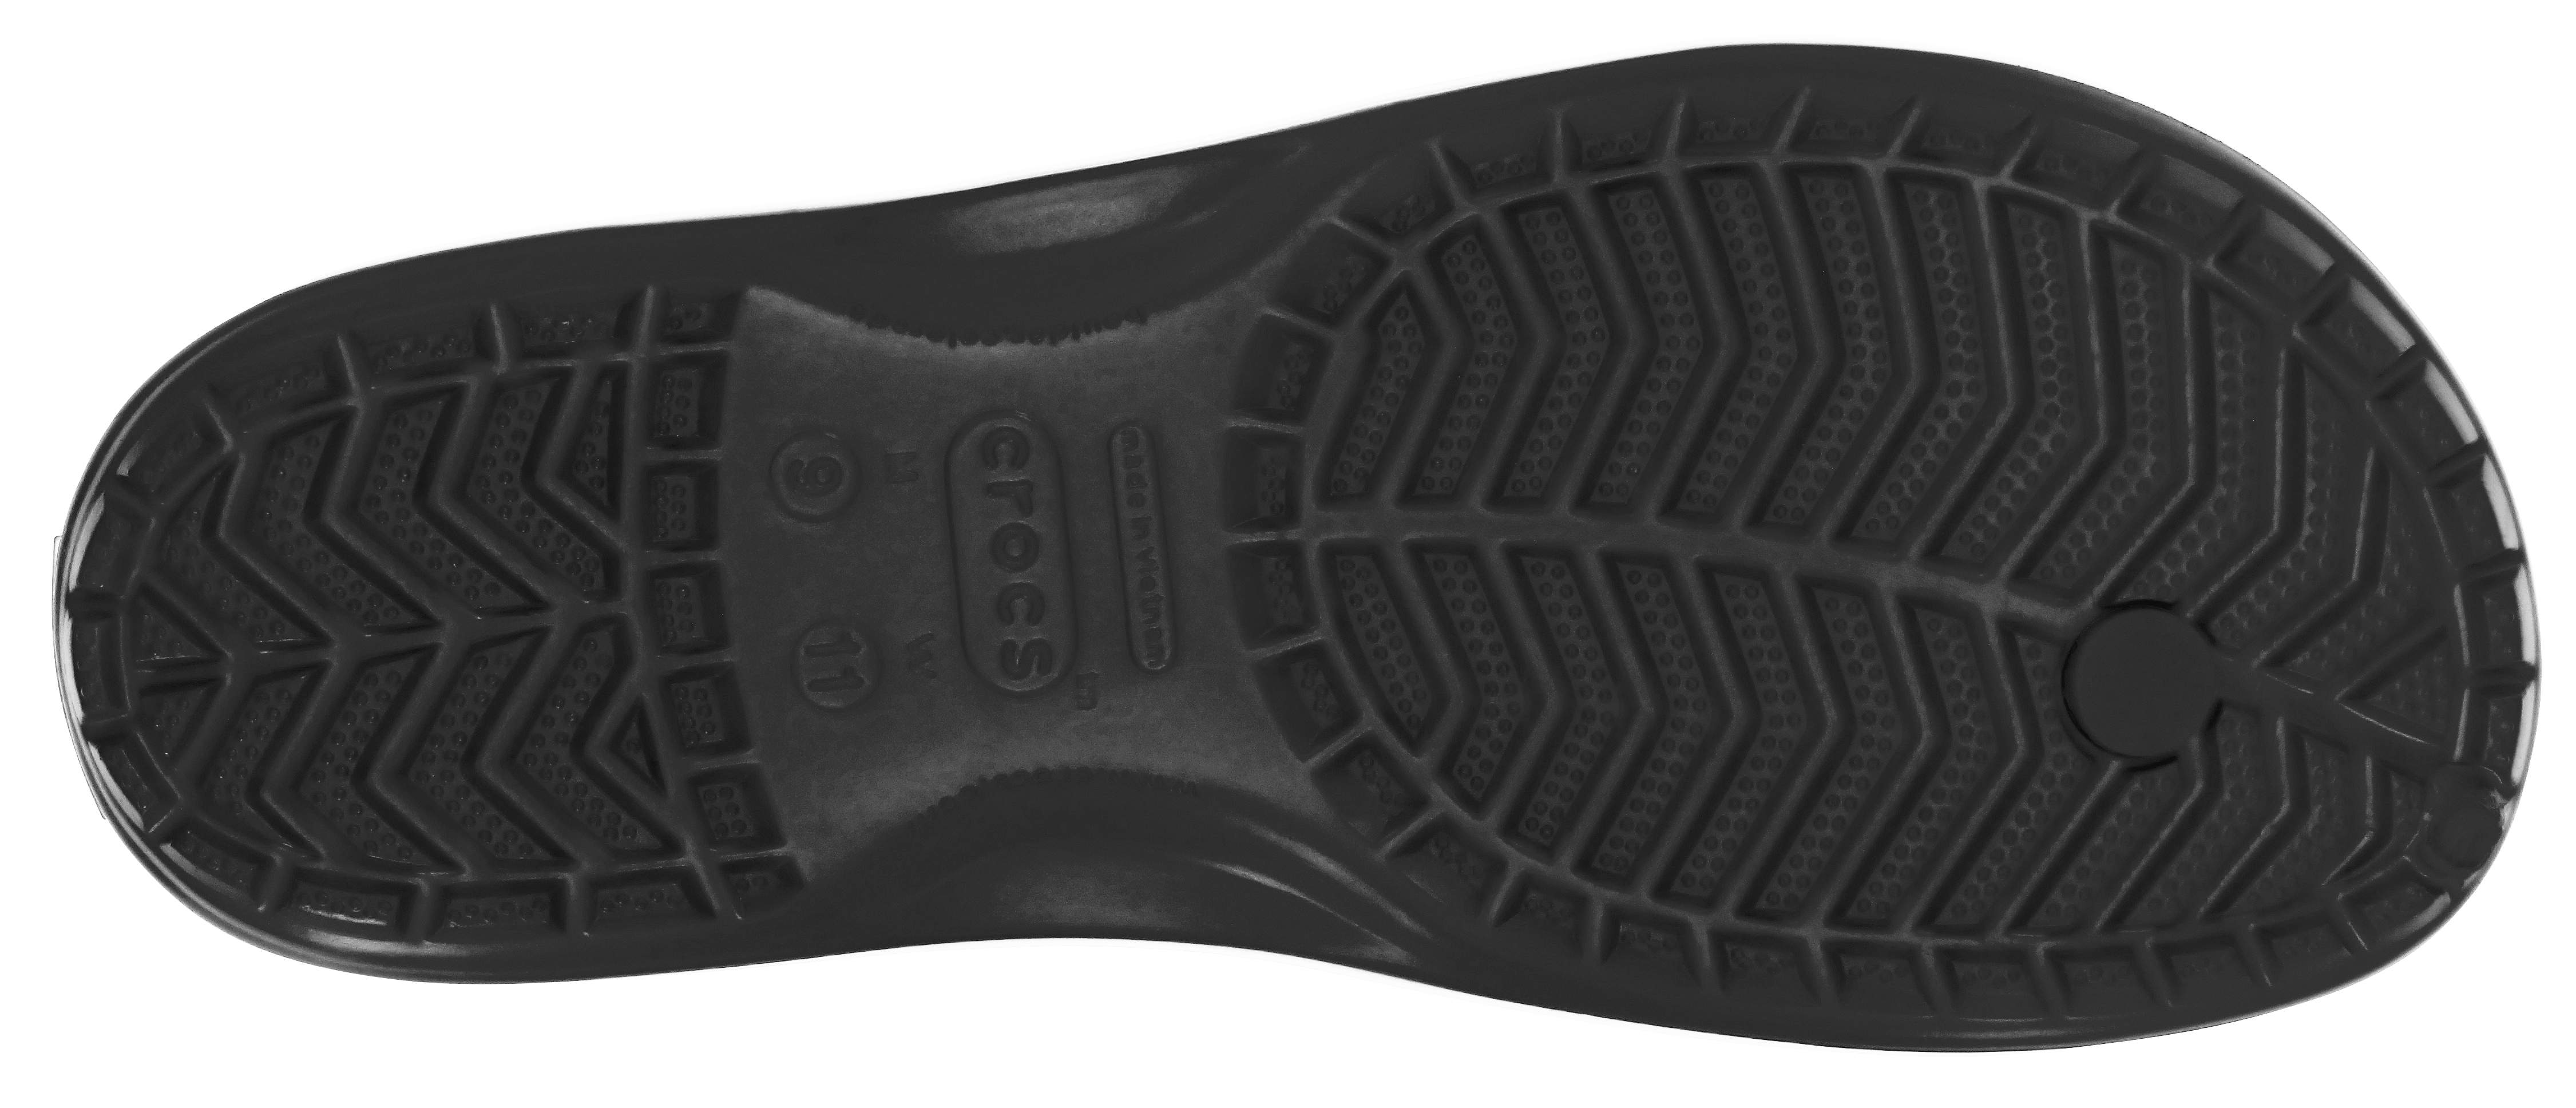 crocs 11033 flip flop